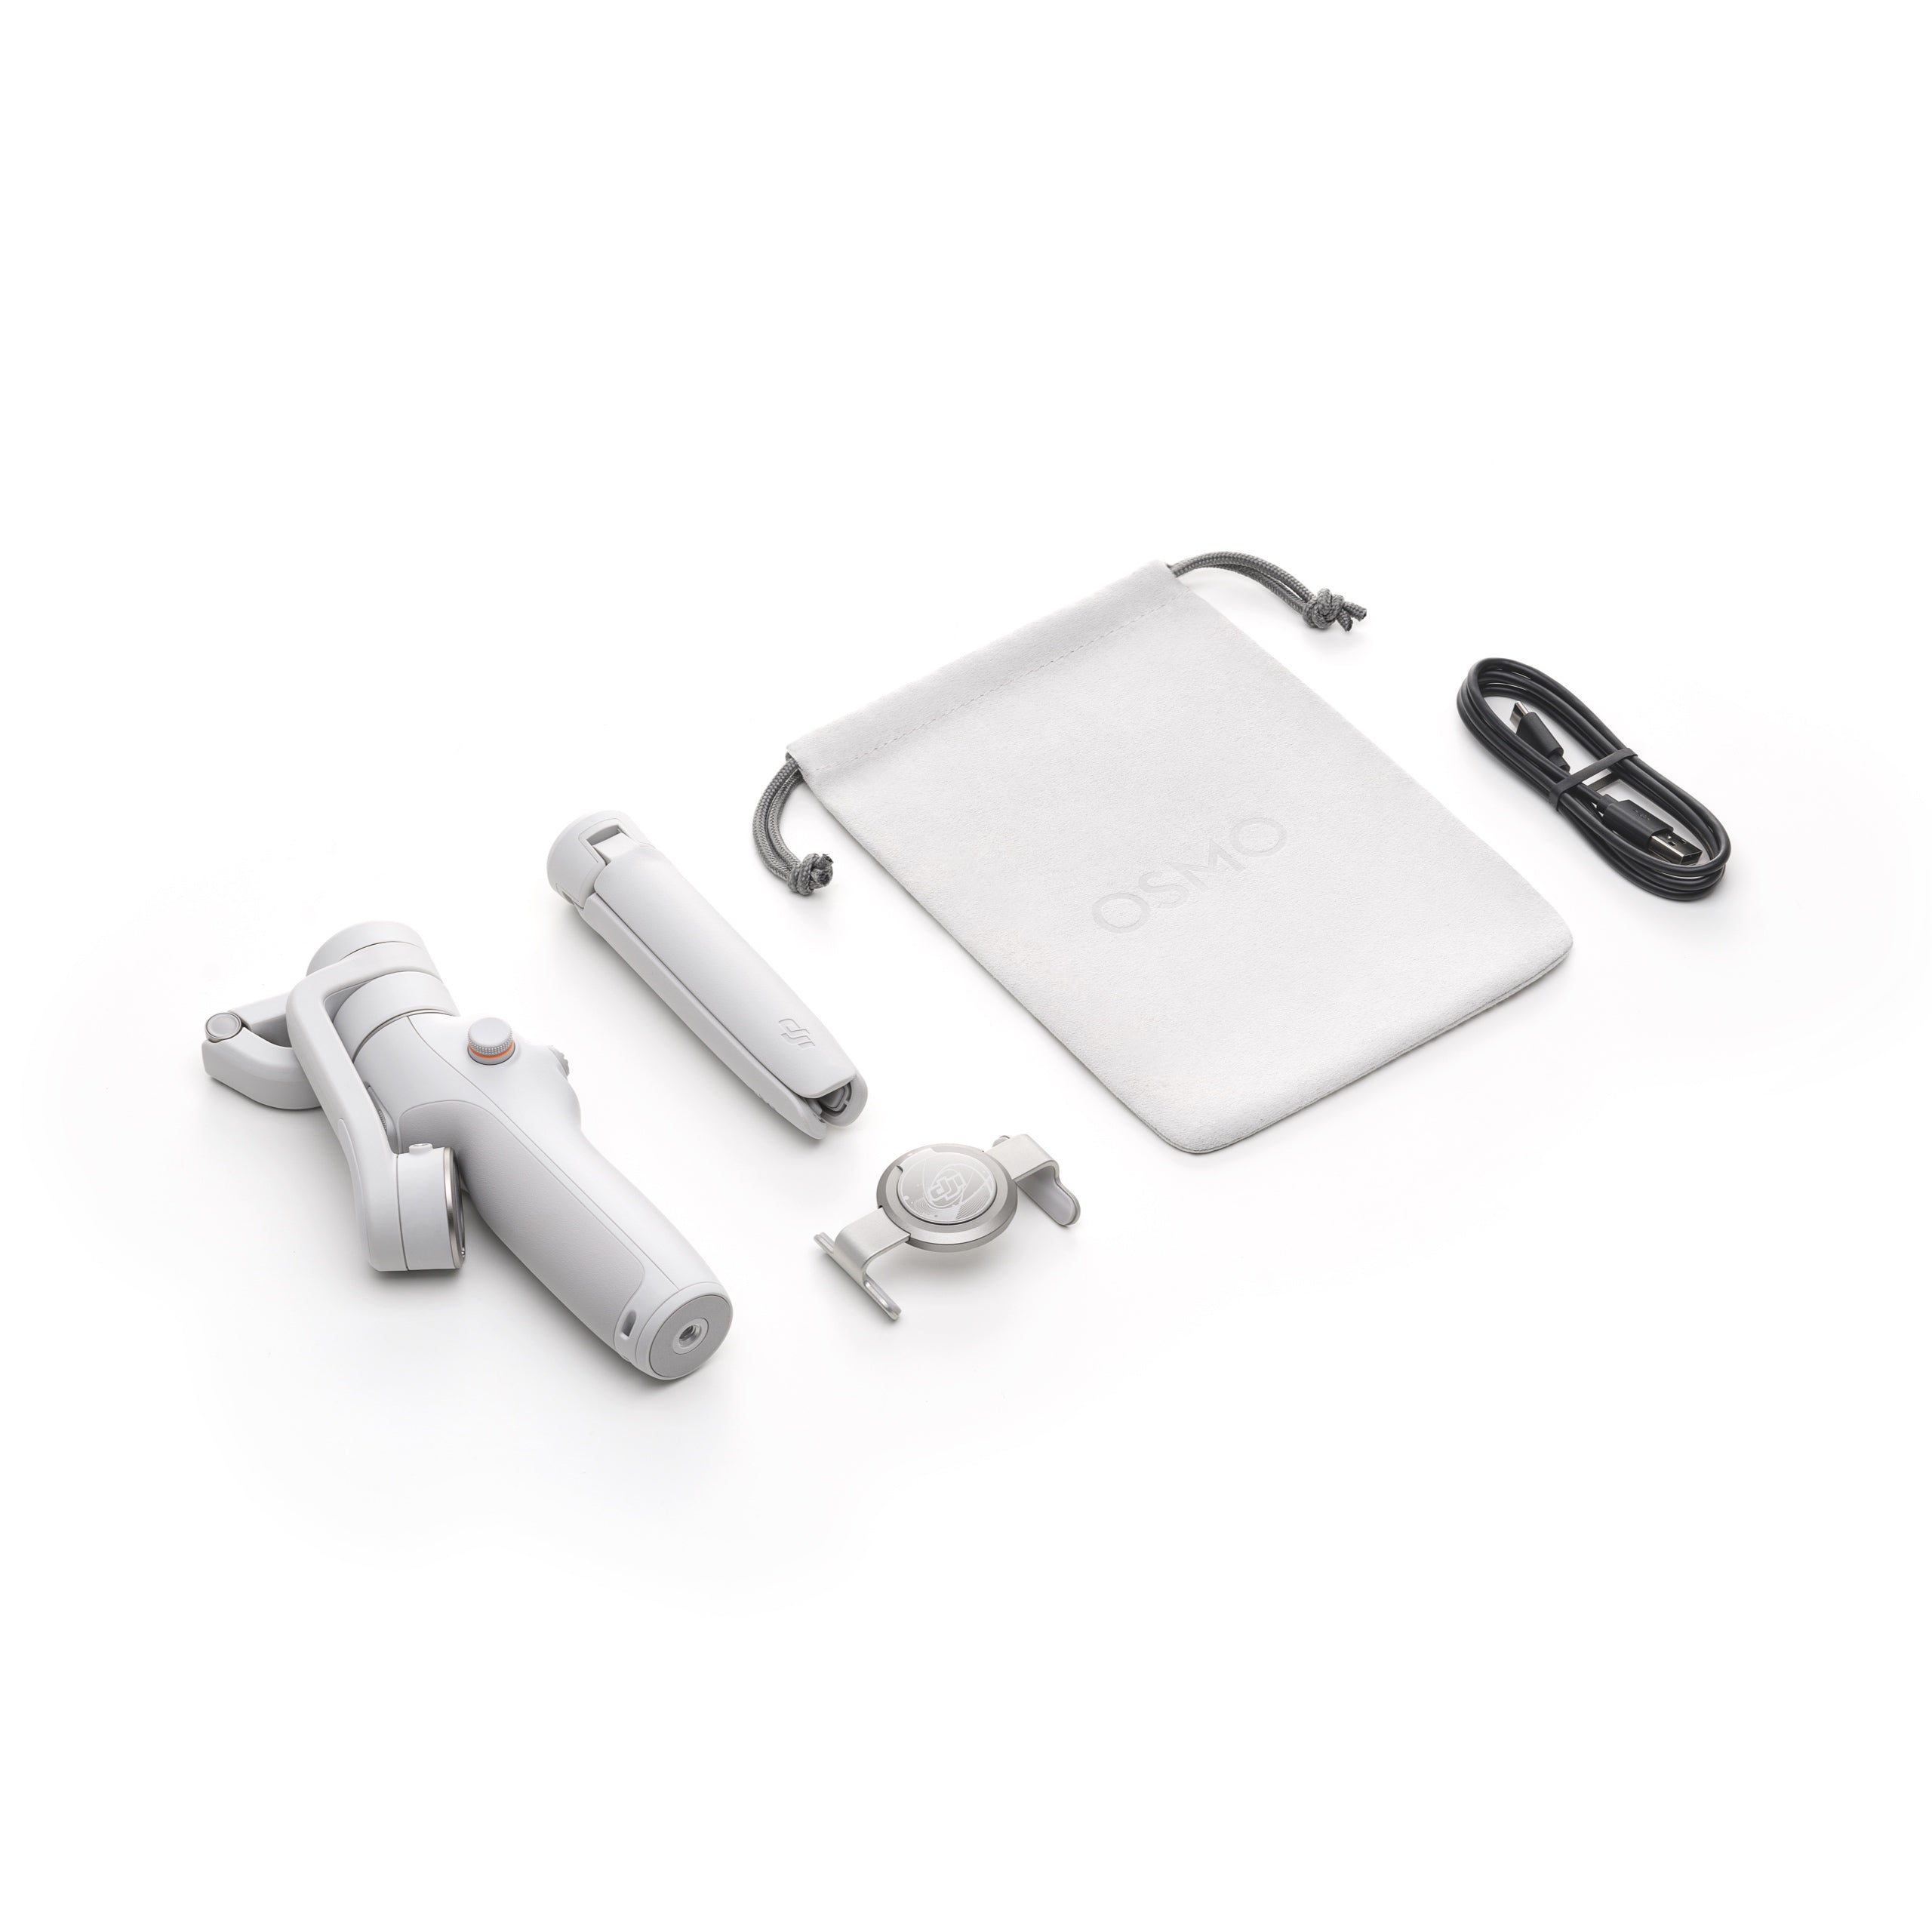 Osmo Mobile 6 Handheld Gimbal - Platinum Gray